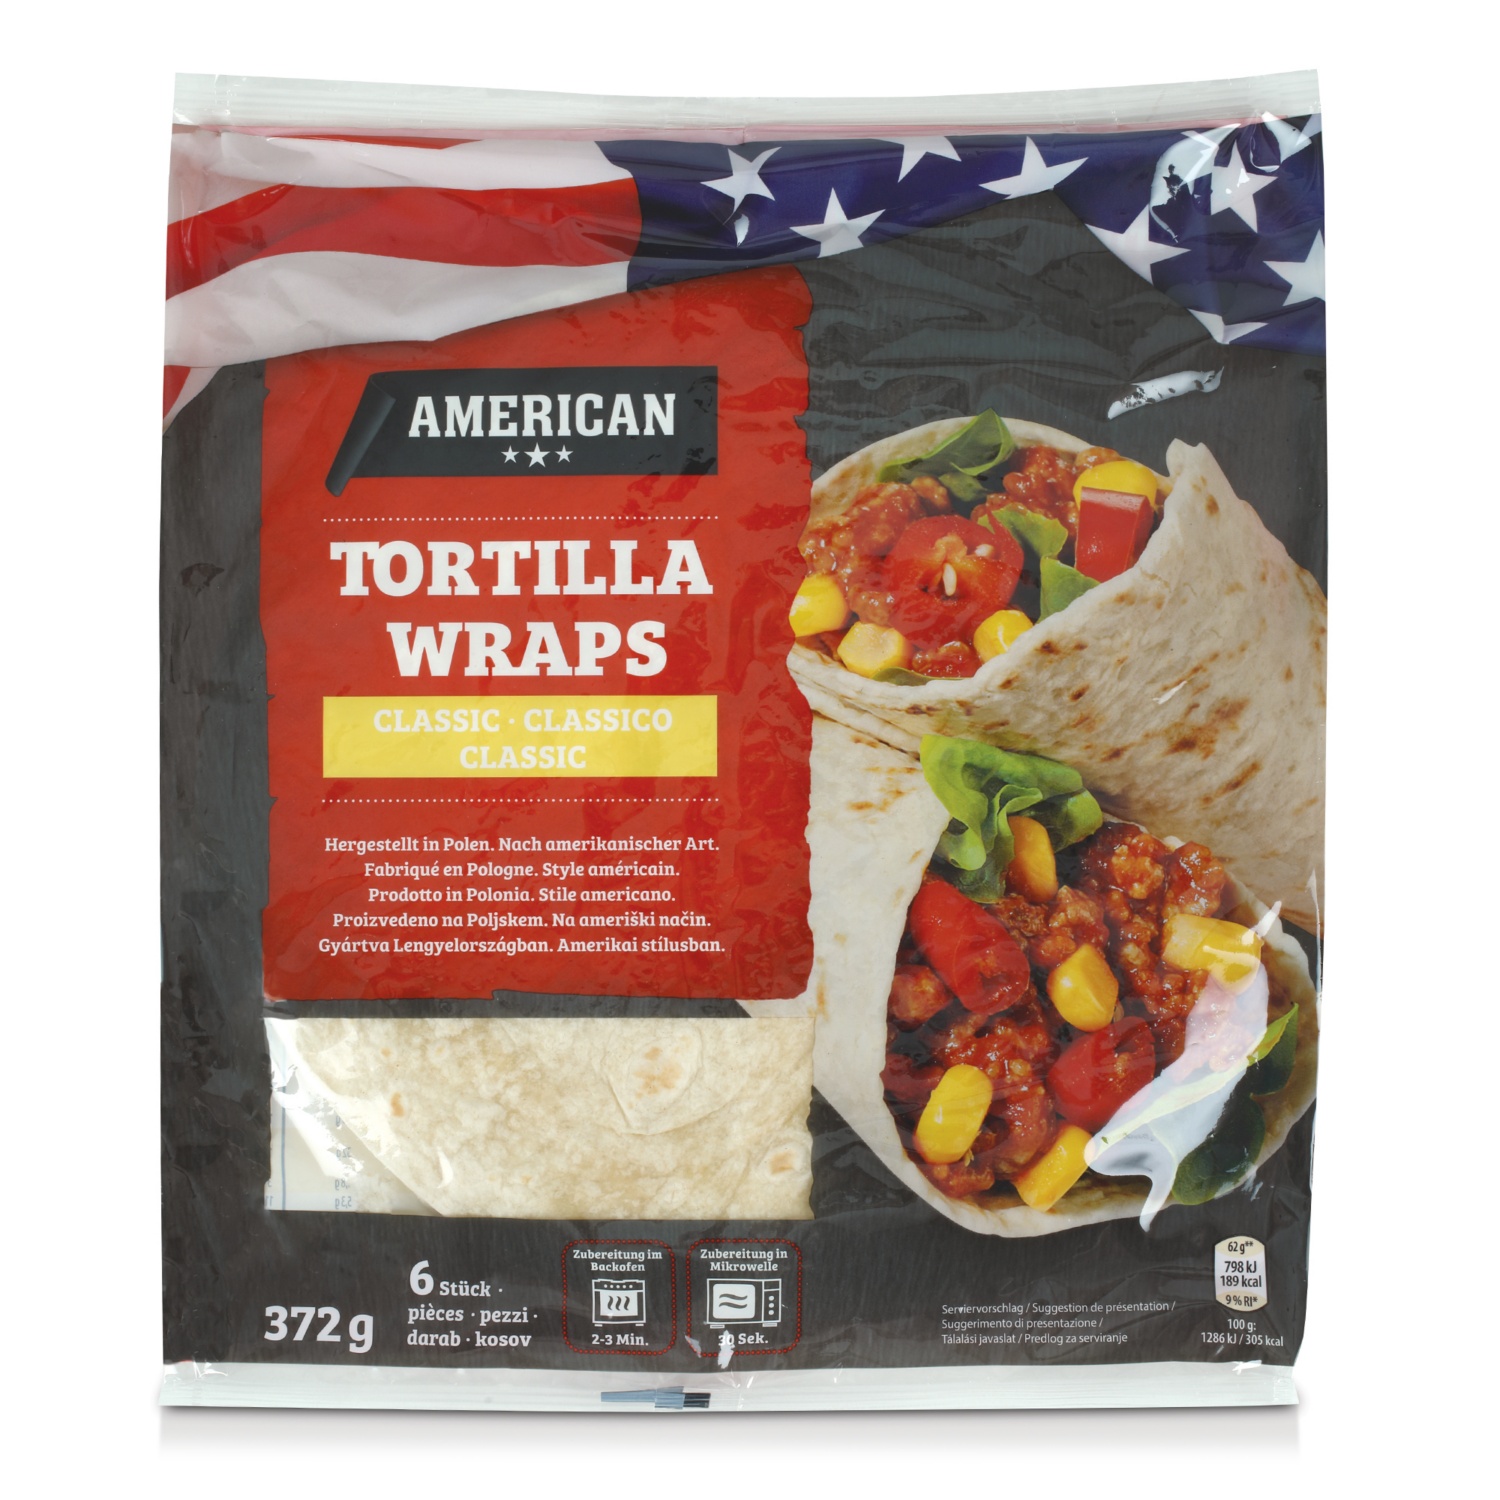 AMERICAN Tortilla wraps al naturale